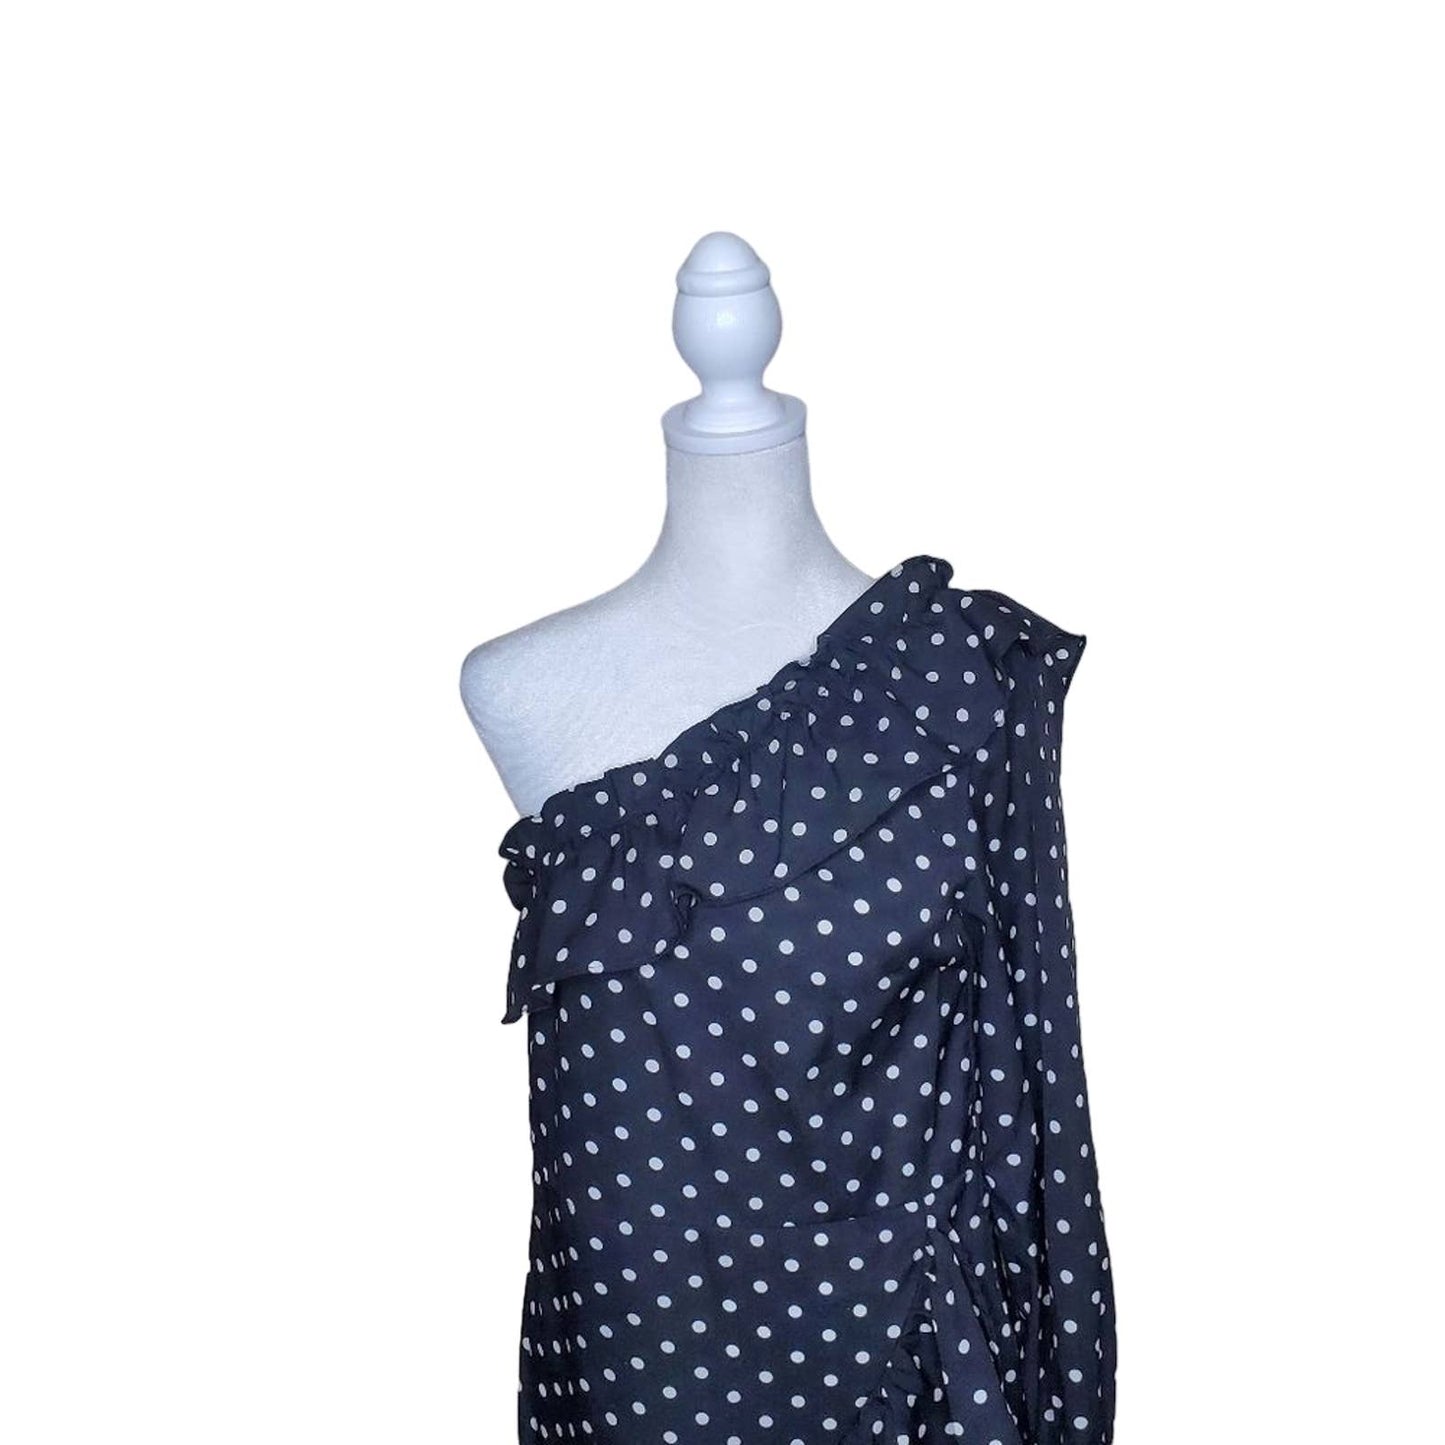 Femme Luxe Black & White Polka Dot One Shoulder Mini Dress, Size X-Small